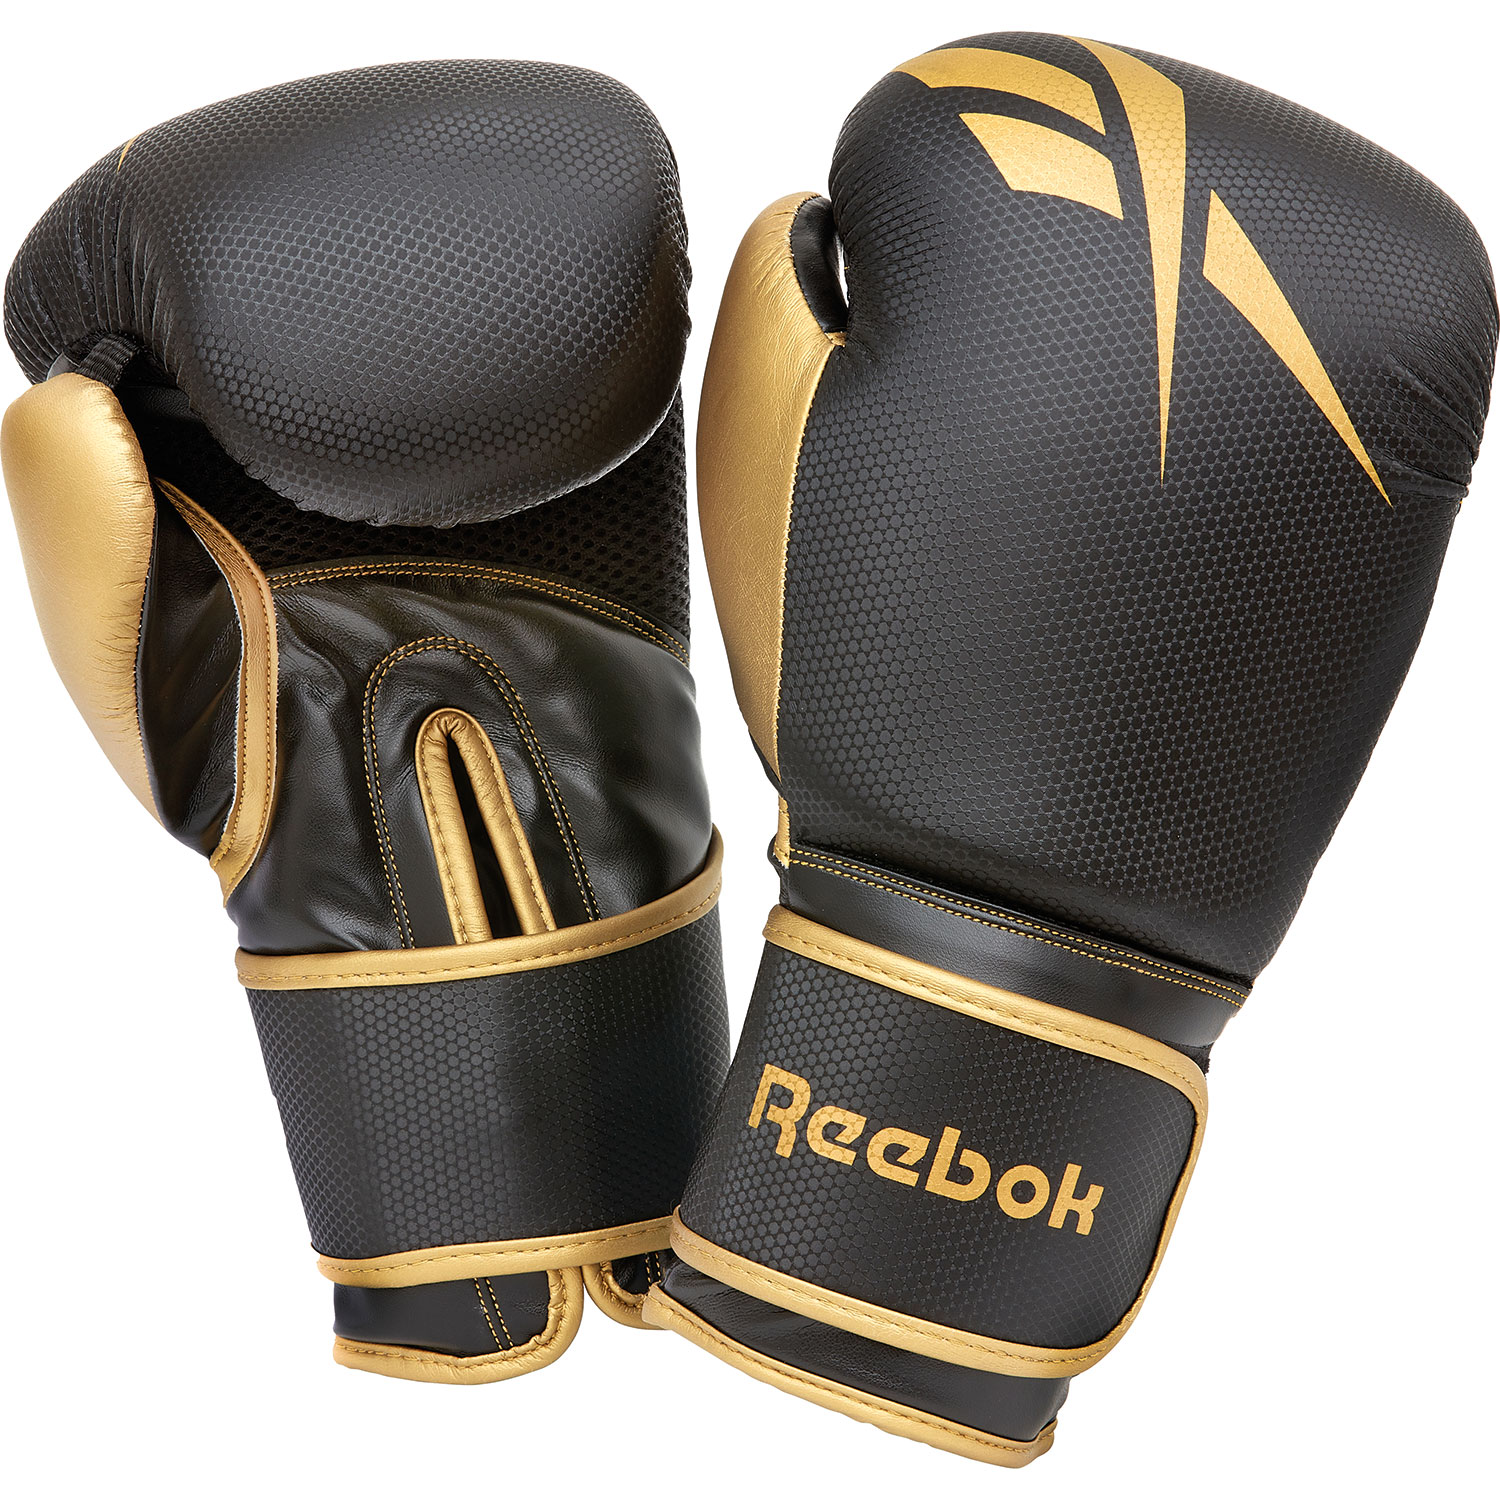 Reebok boxing gloves gold/black 12 oz